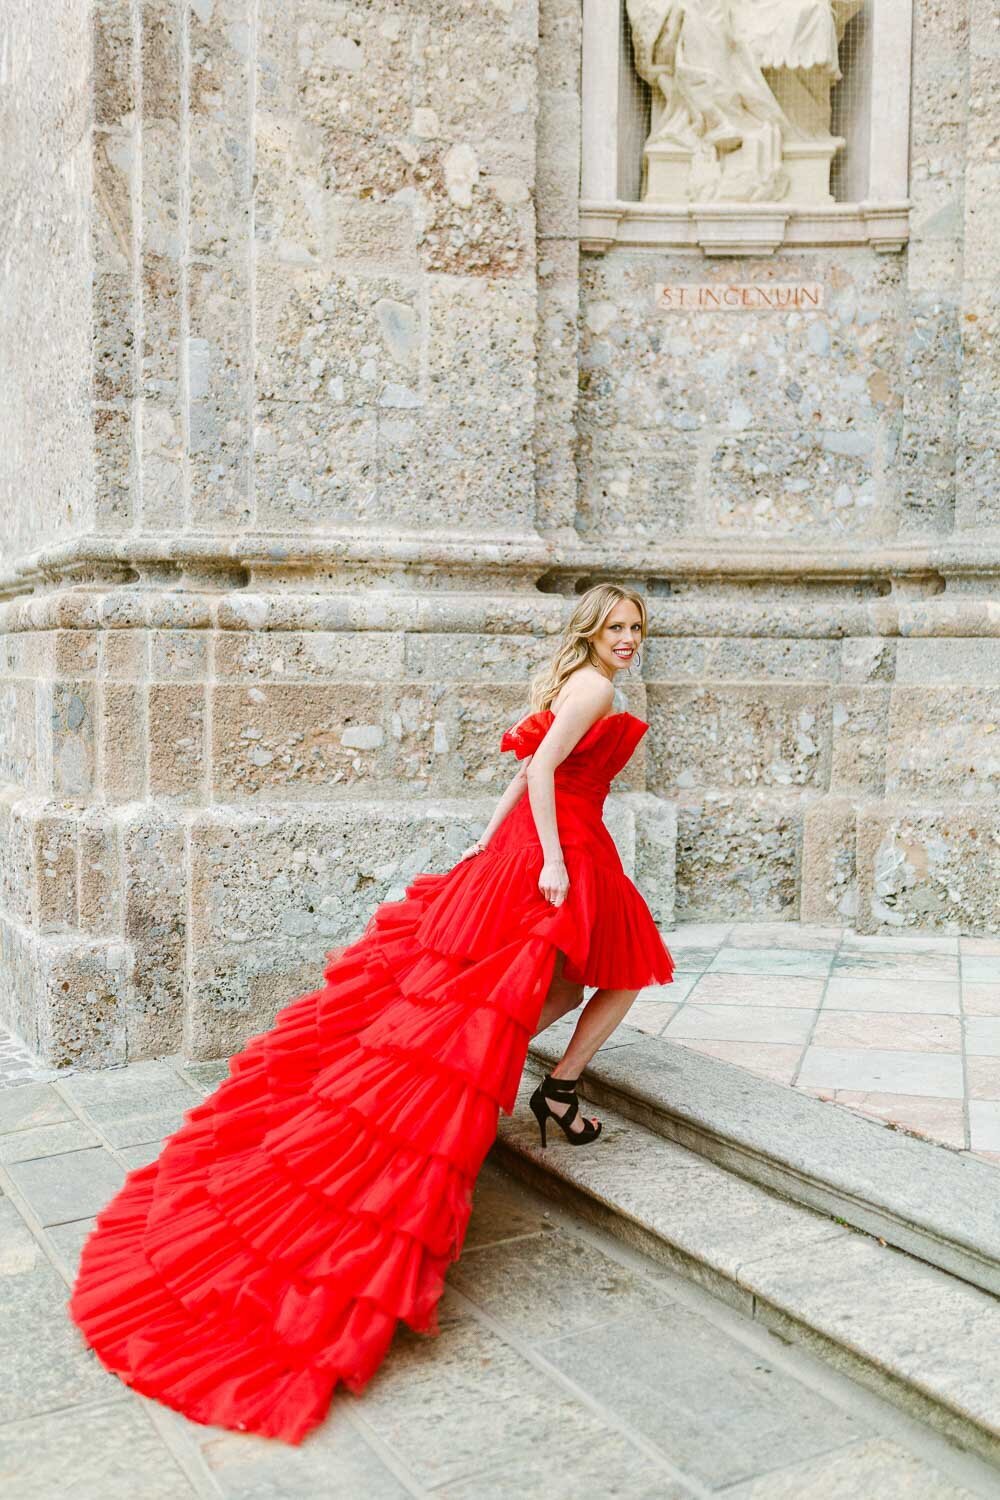 Amazing red gown in Innsbruck